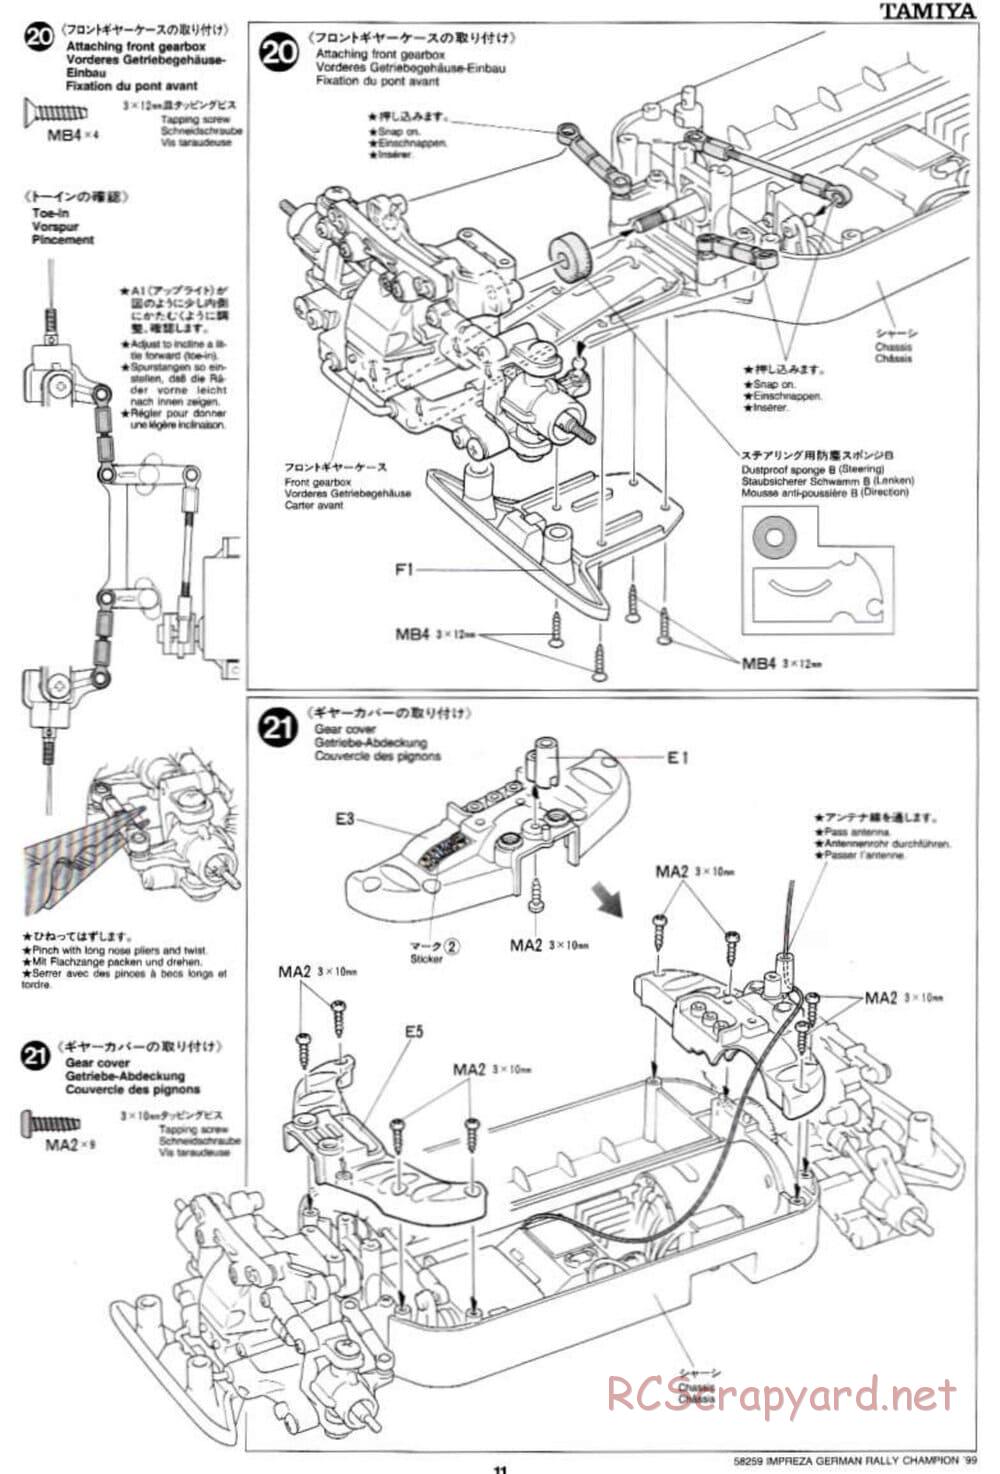 Tamiya - Subaru Impreza German Rally Champion 99 - TB-01 Chassis - Manual - Page 11